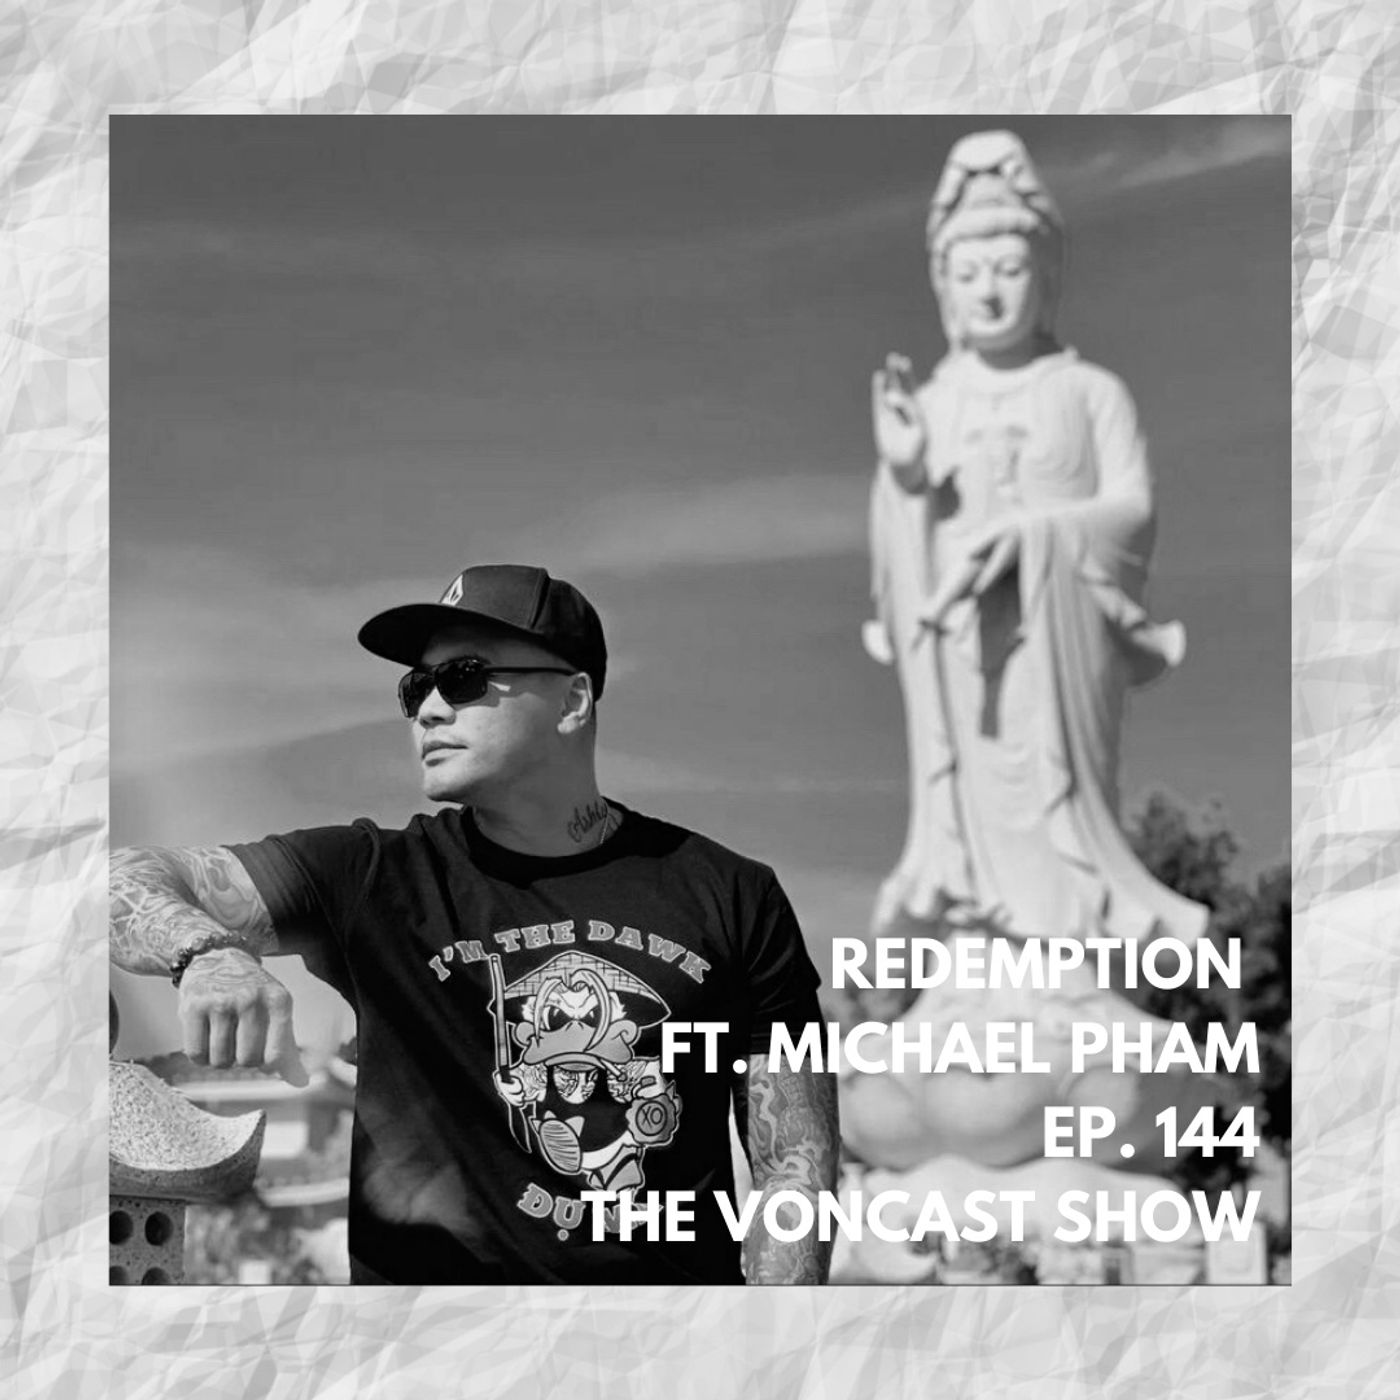 Ep. 144 Redemption ft. Michael Pham